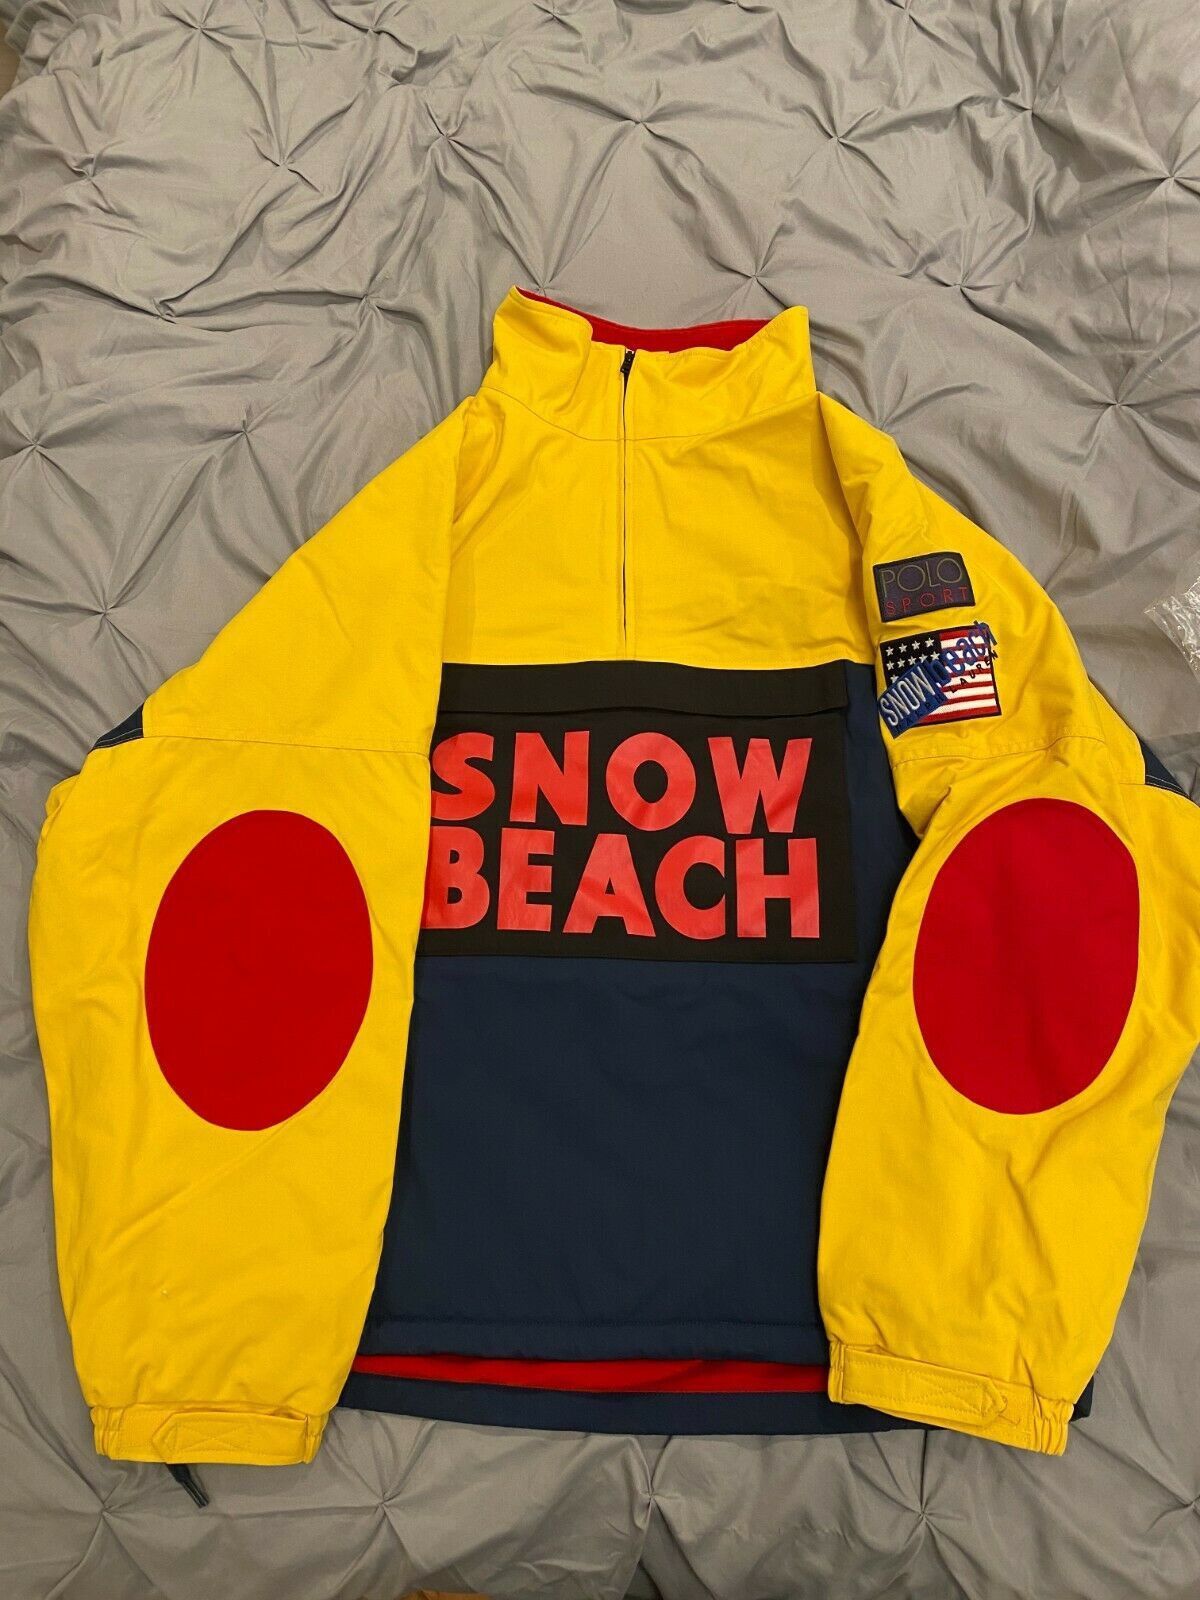 Polo Ralph Lauren Snow Beach Jacket | Grailed